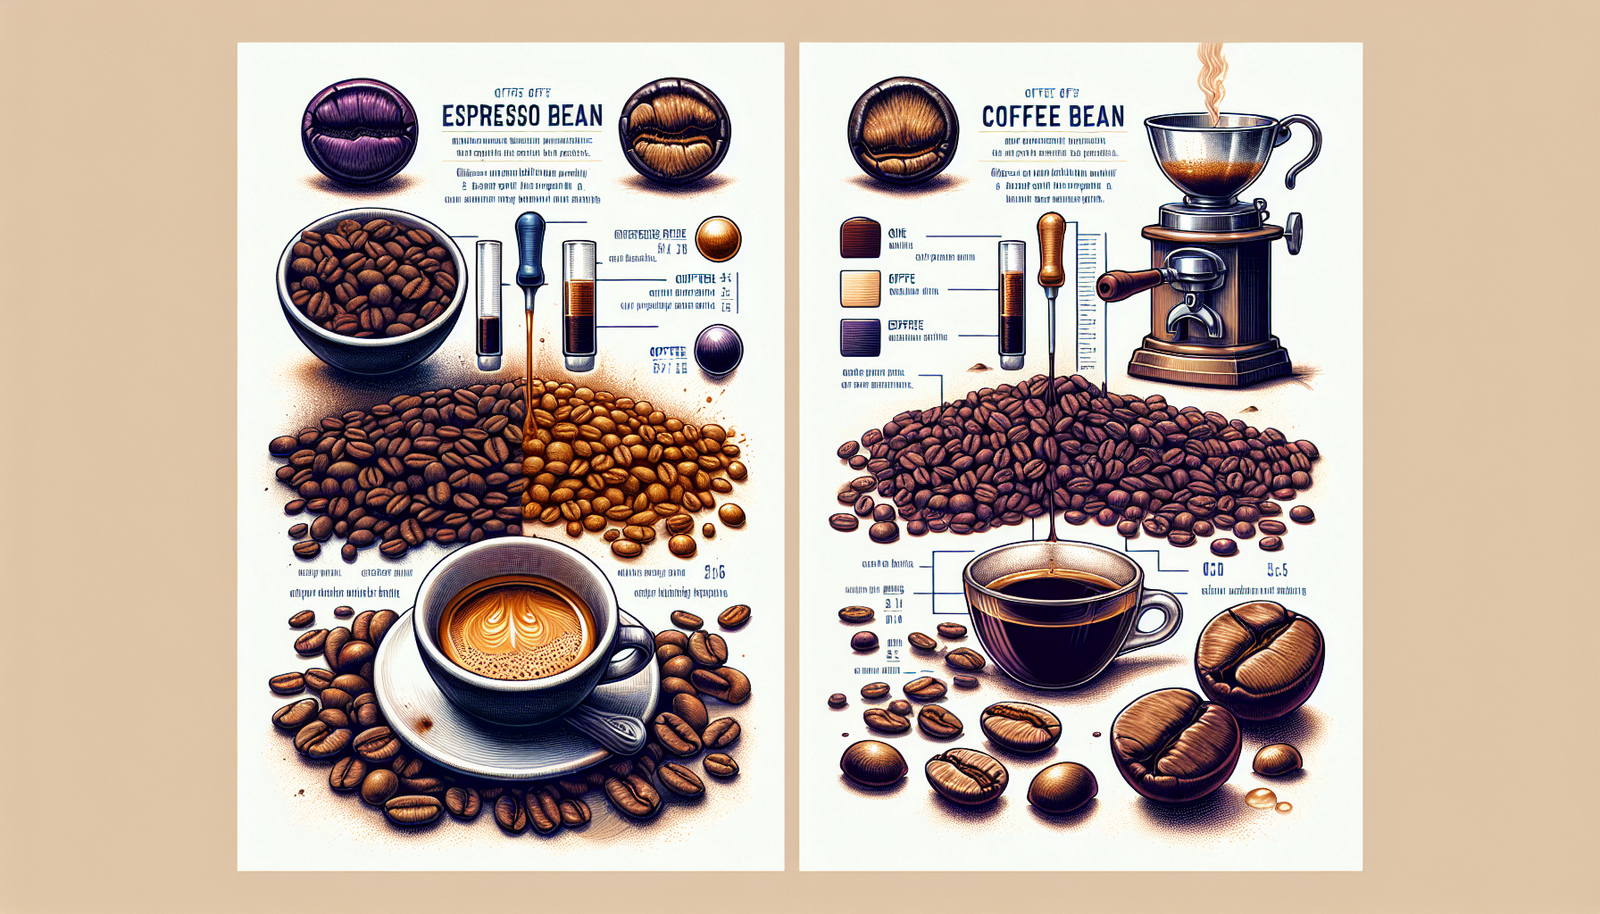 espresso beans vs coffee beans 1